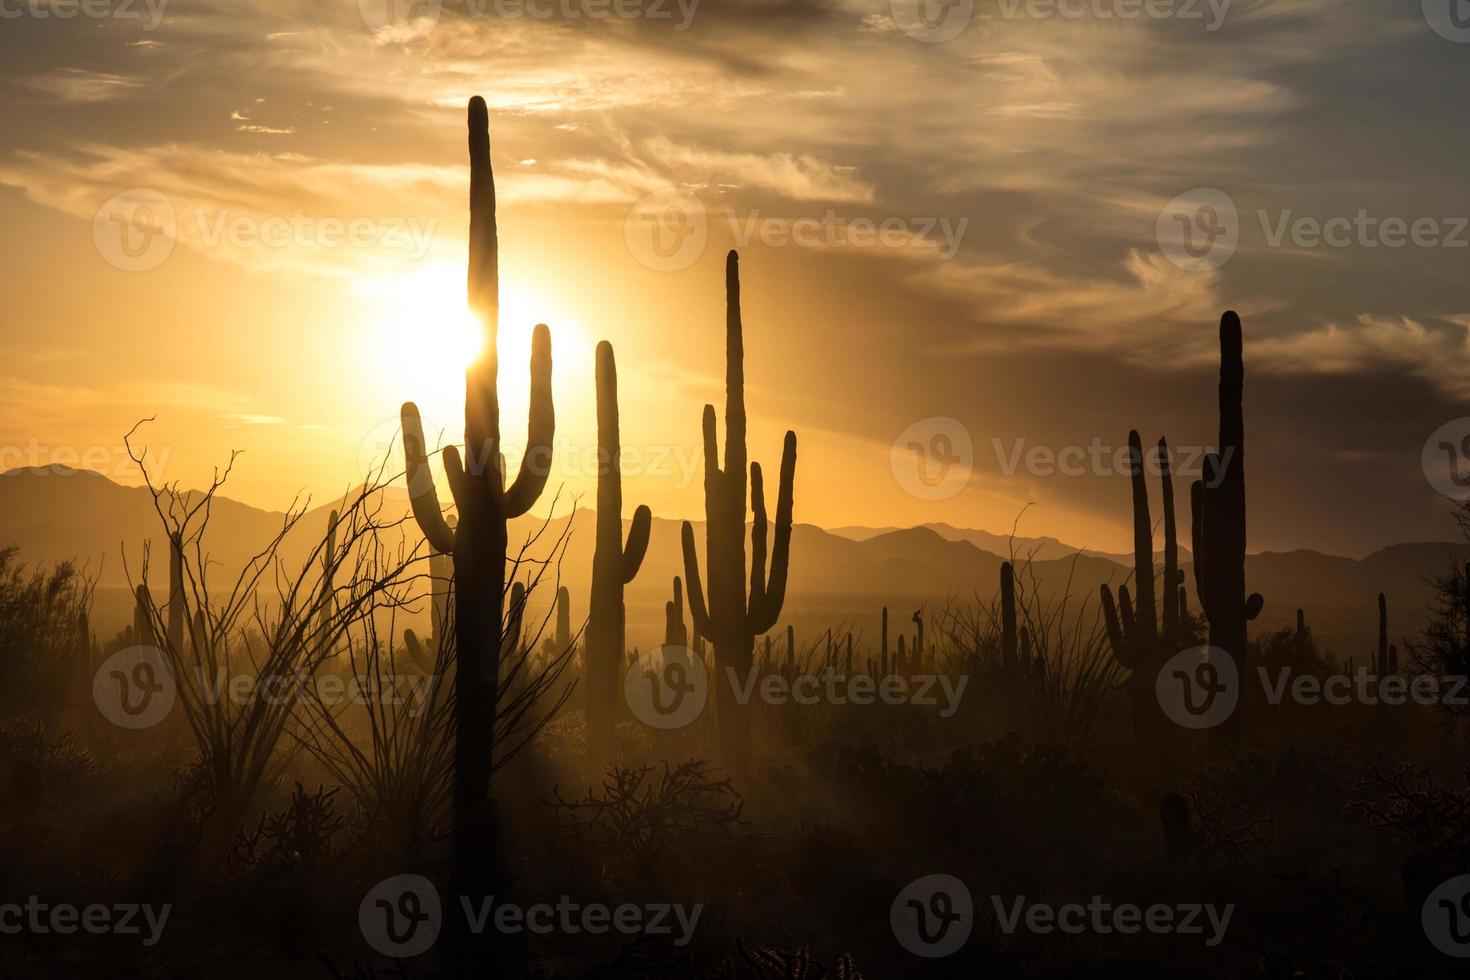 Saguaro Cactus silhouettes against golden sunset skies, Tucson, AZ photo